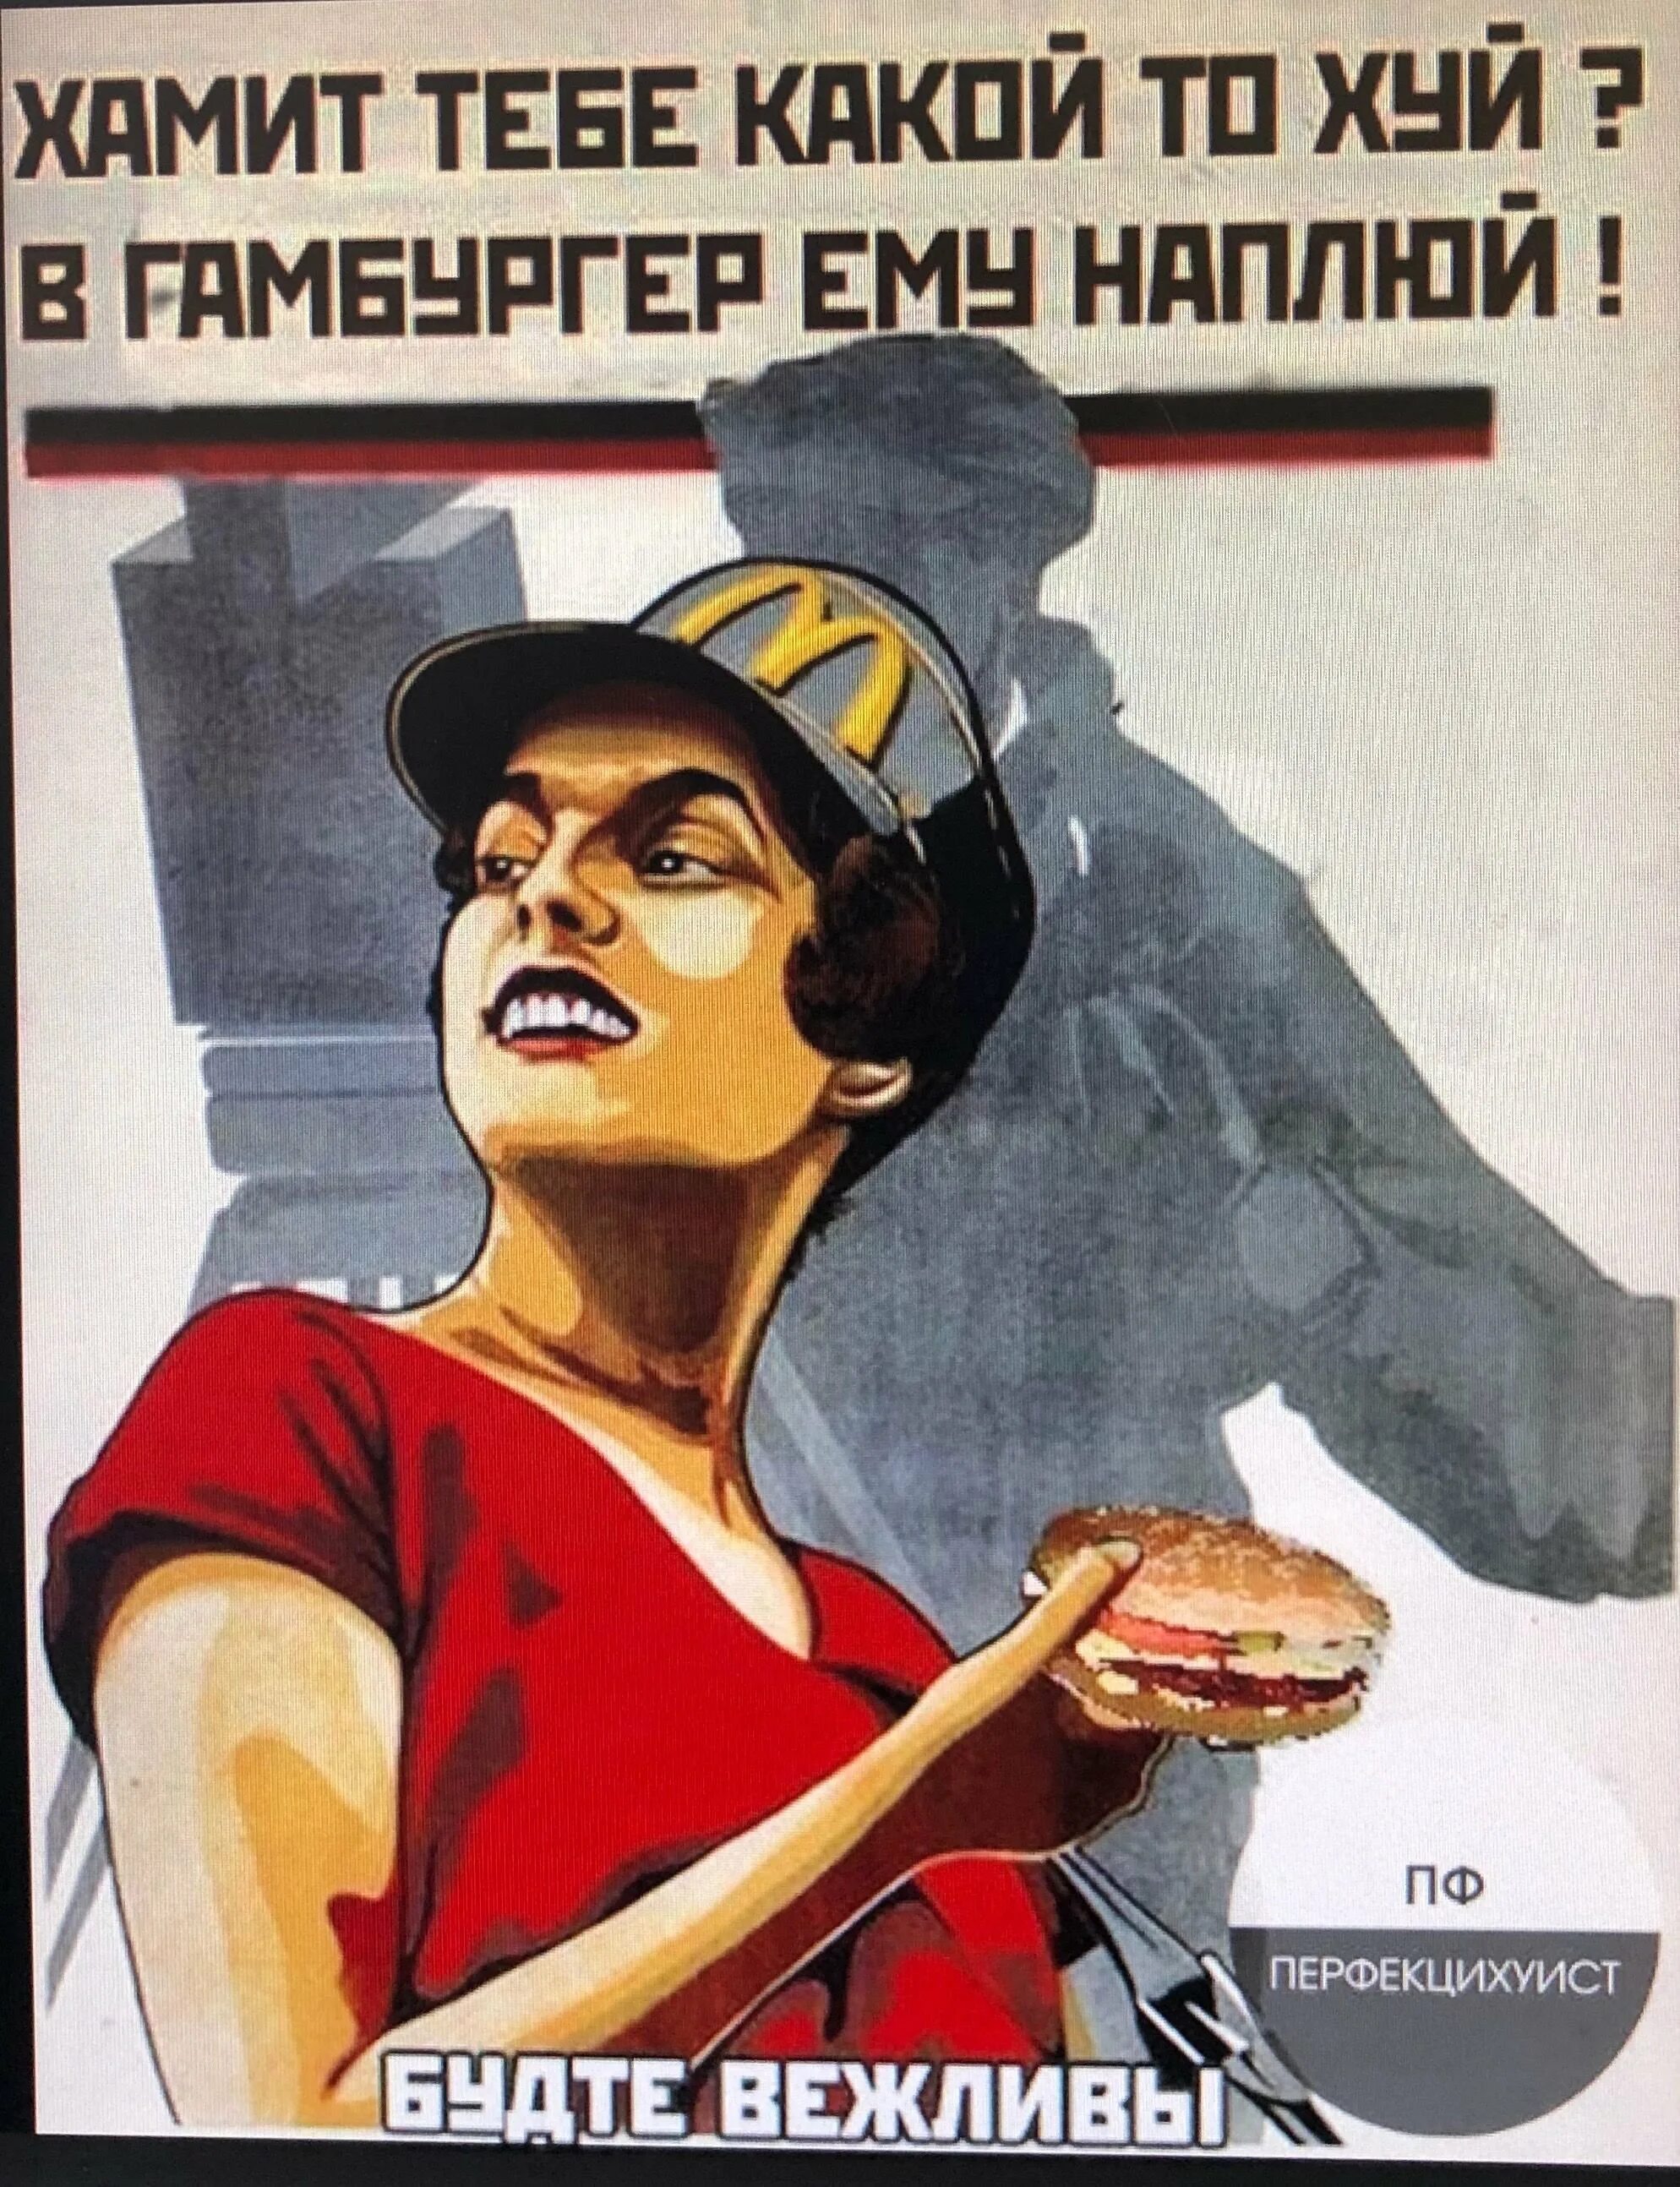 Прикольные плакаты. Прикольные советские плакаты. Юморестические плакат. Переделанные советские плакаты.